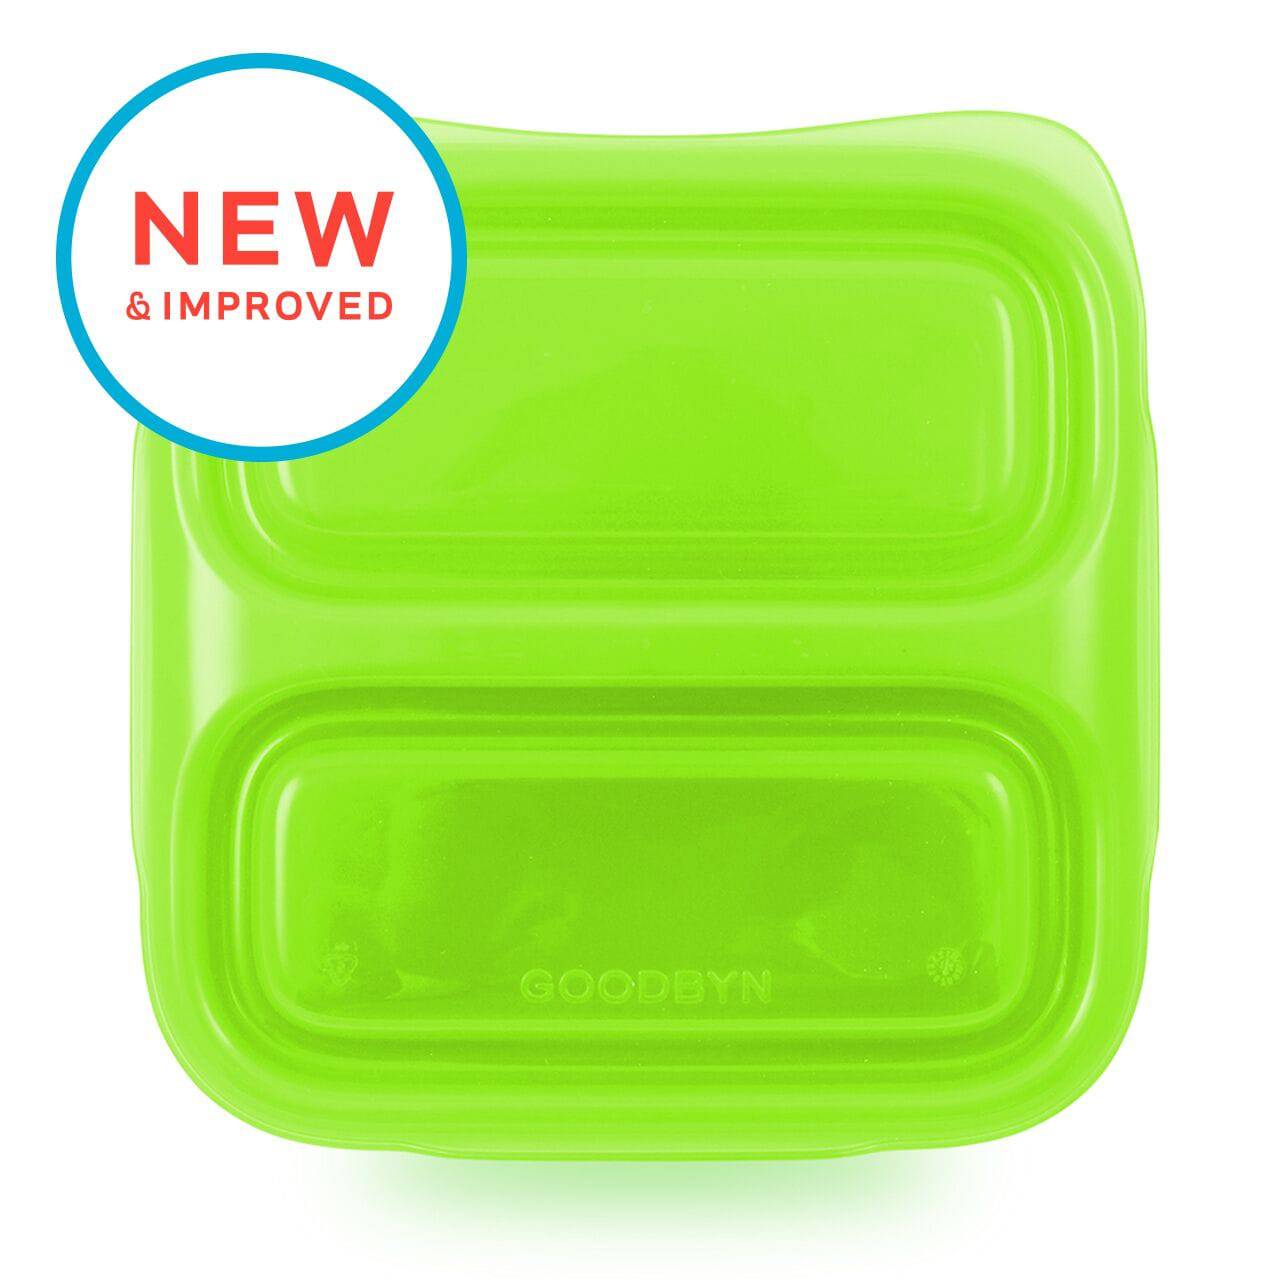 Goodbyn Small Meal ~ older model - LunchBox Inc.